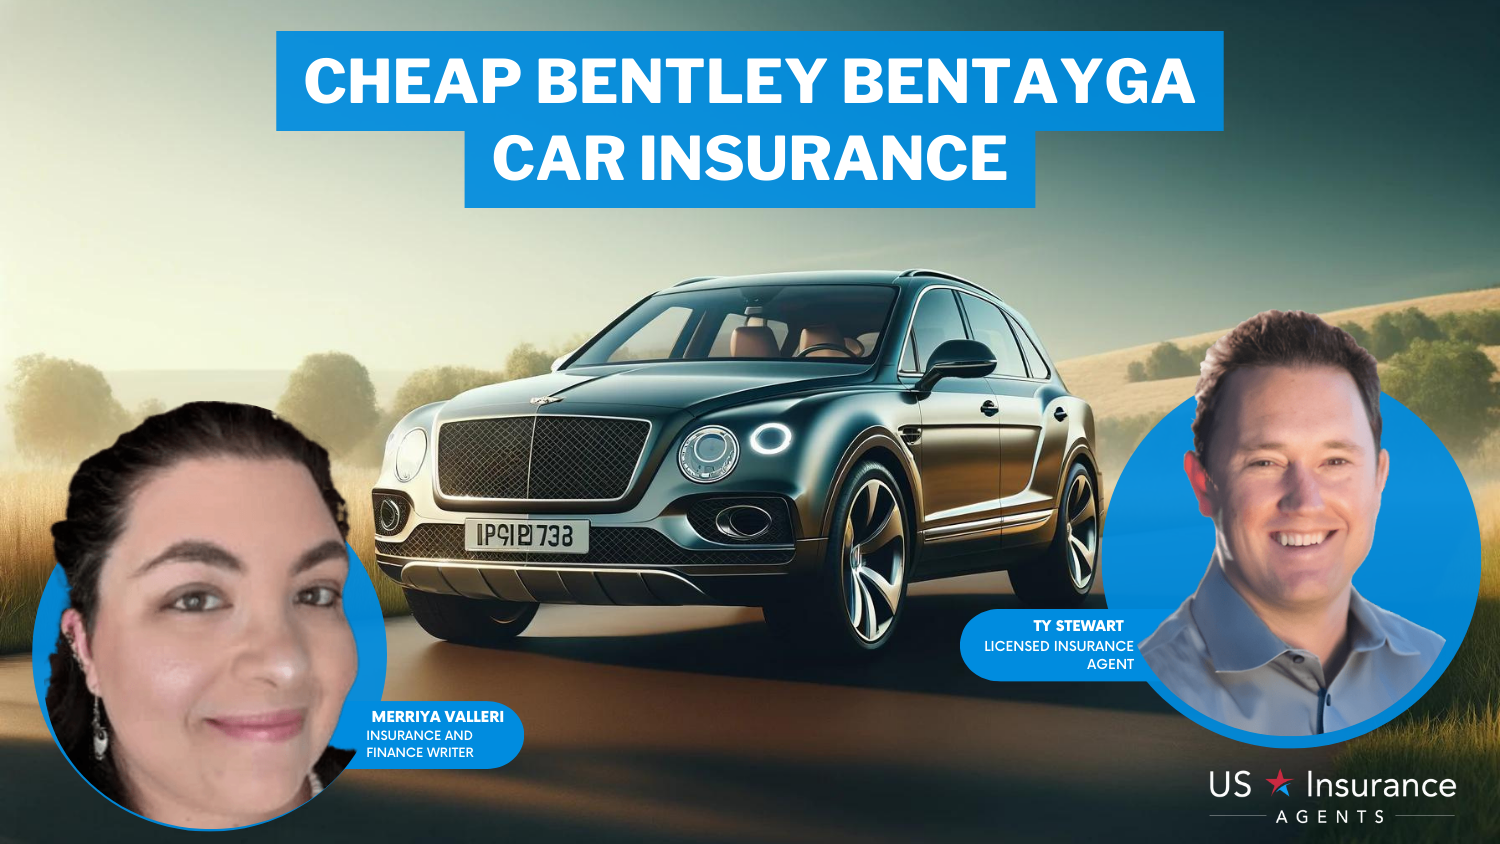 Cheap Bentley Bentayga Car Insurance: State Farm, Geico, and USAA